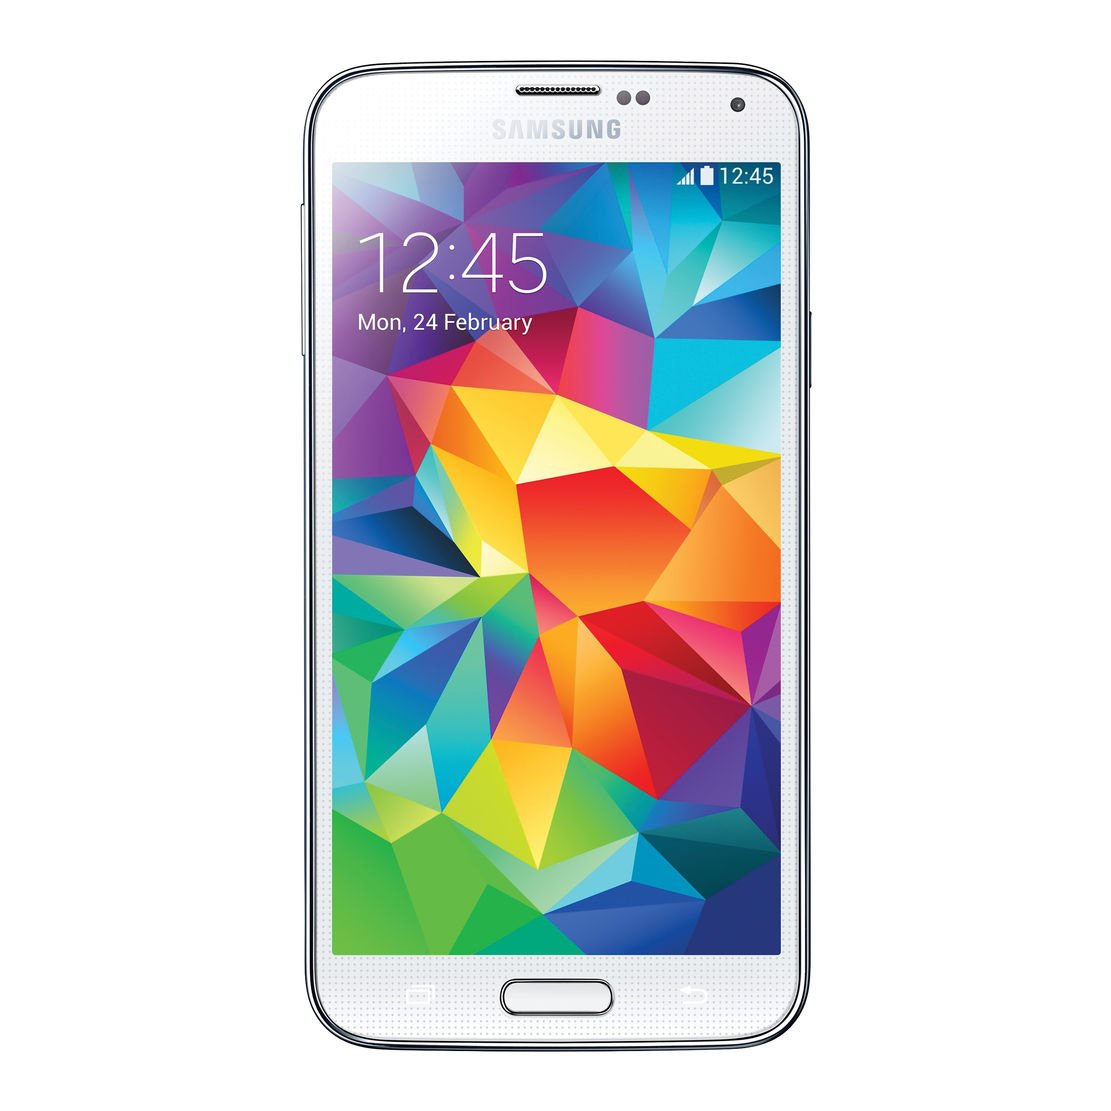 Samsung Galaxy S5 test, review, vergleich - PhonesData